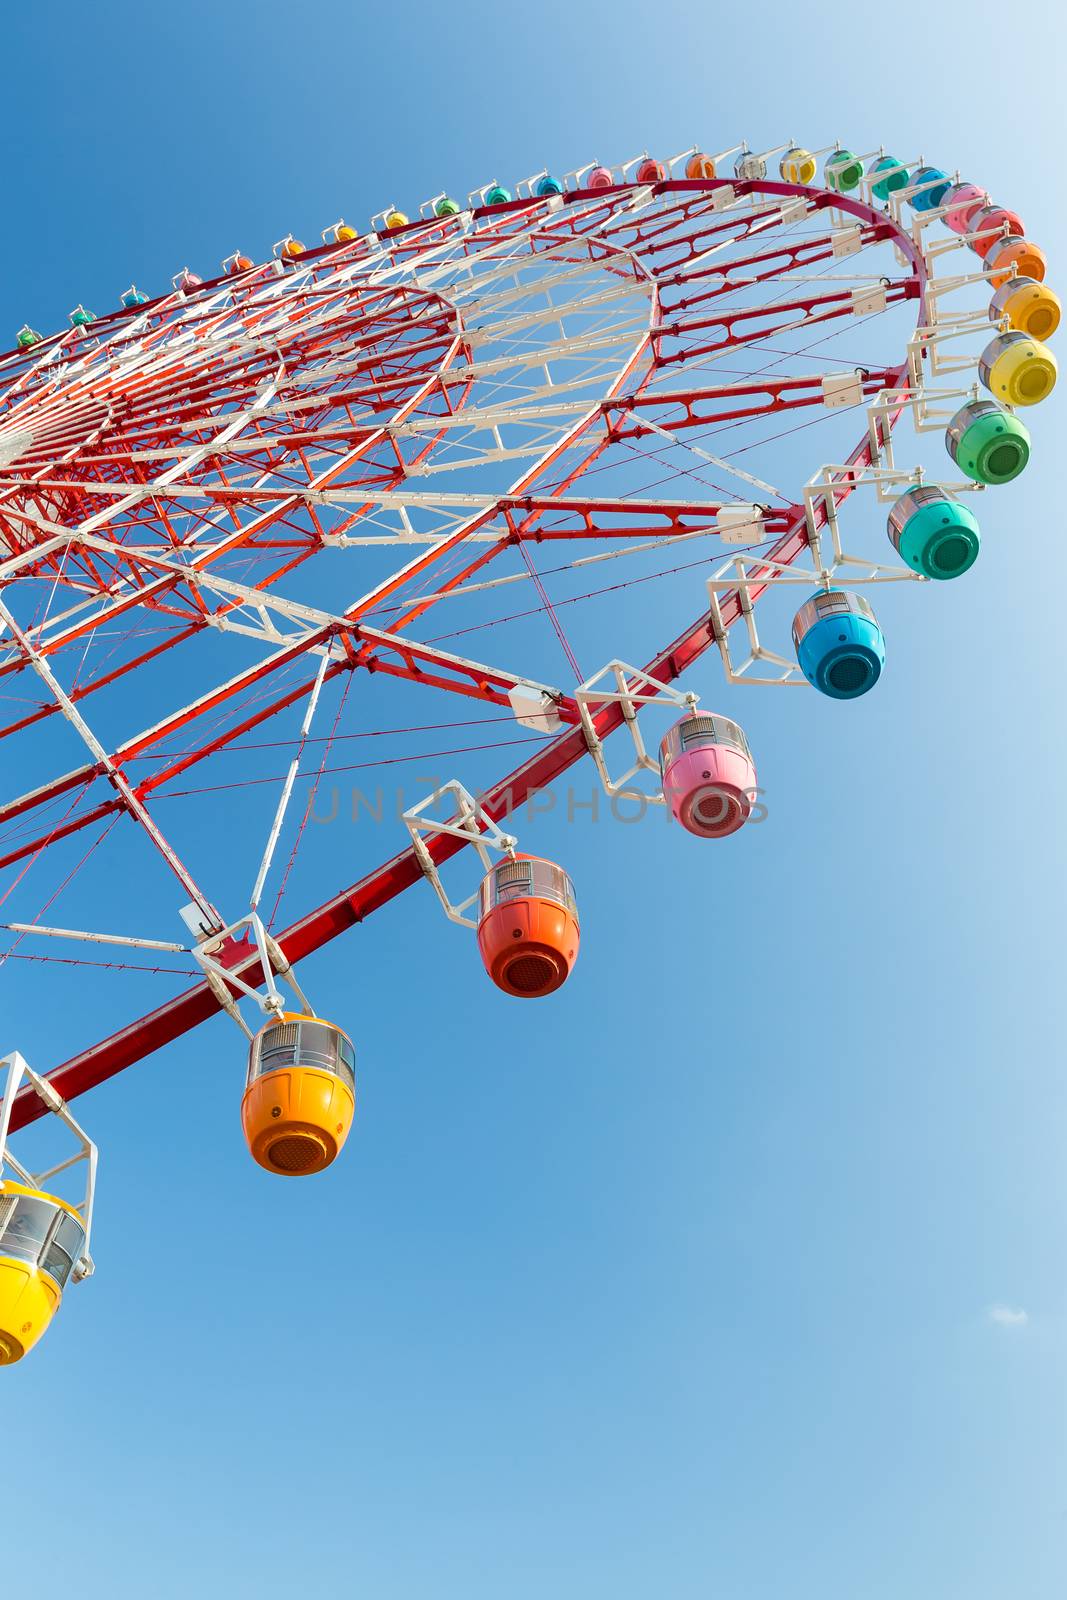 Ferris wheel with clear blue sky by leungchopan